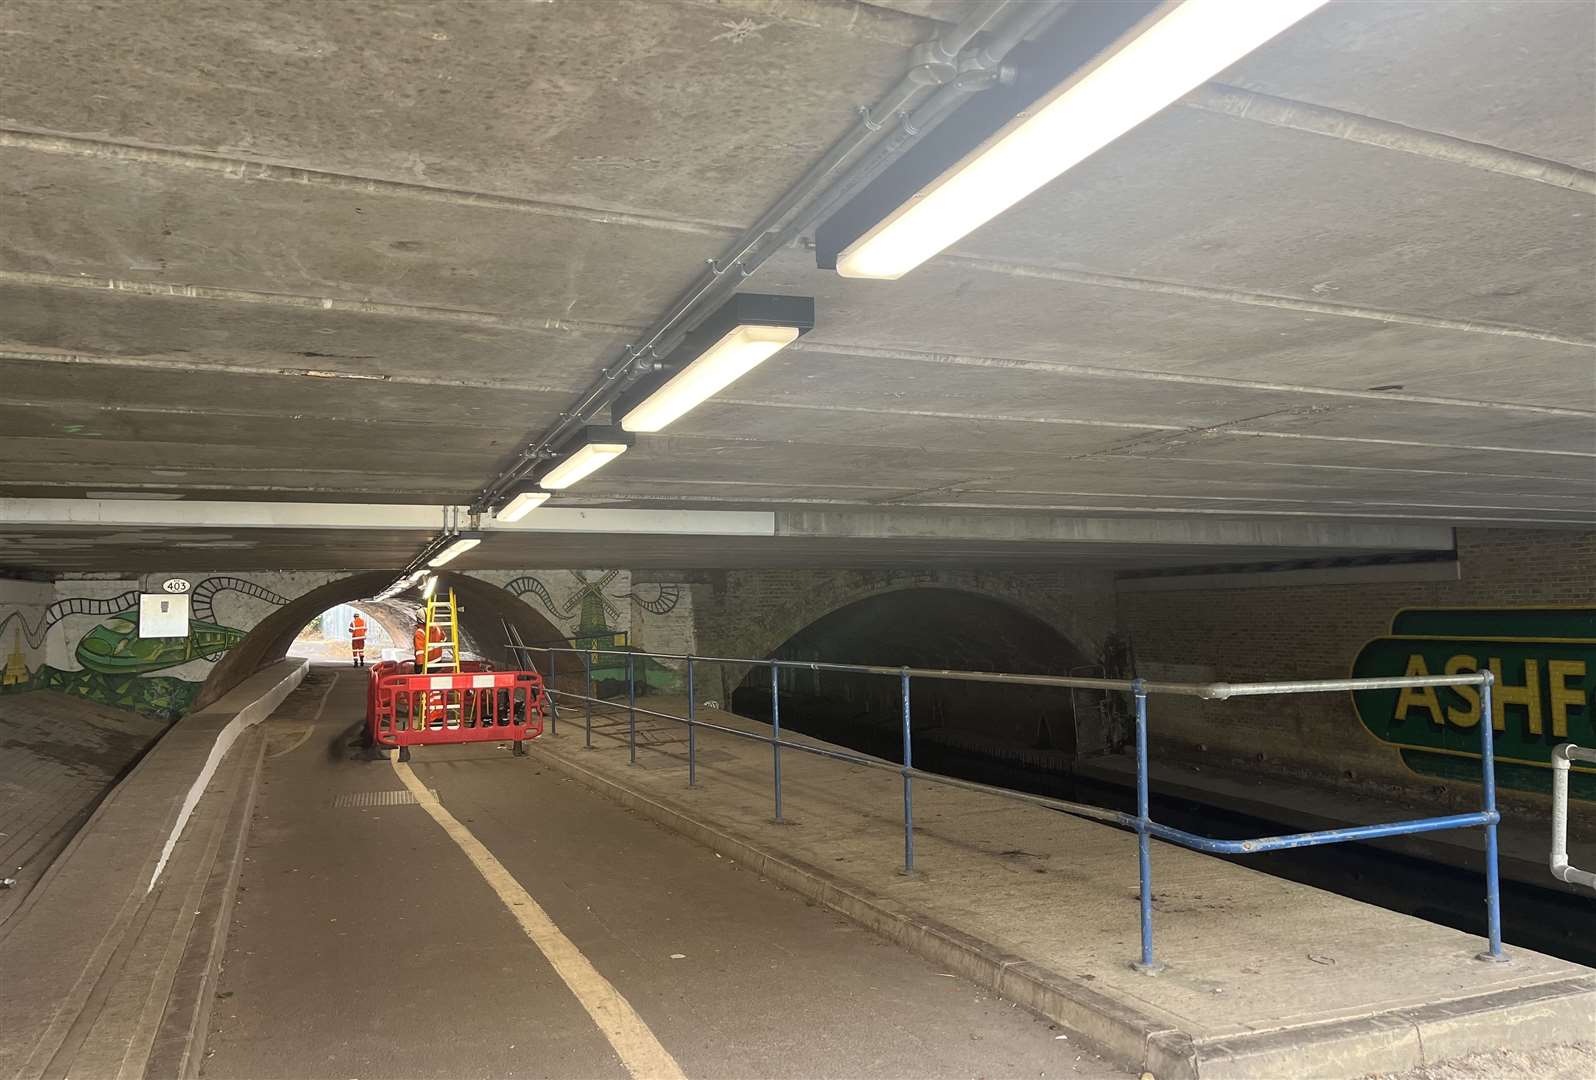 New lighting has been installed in the underpass